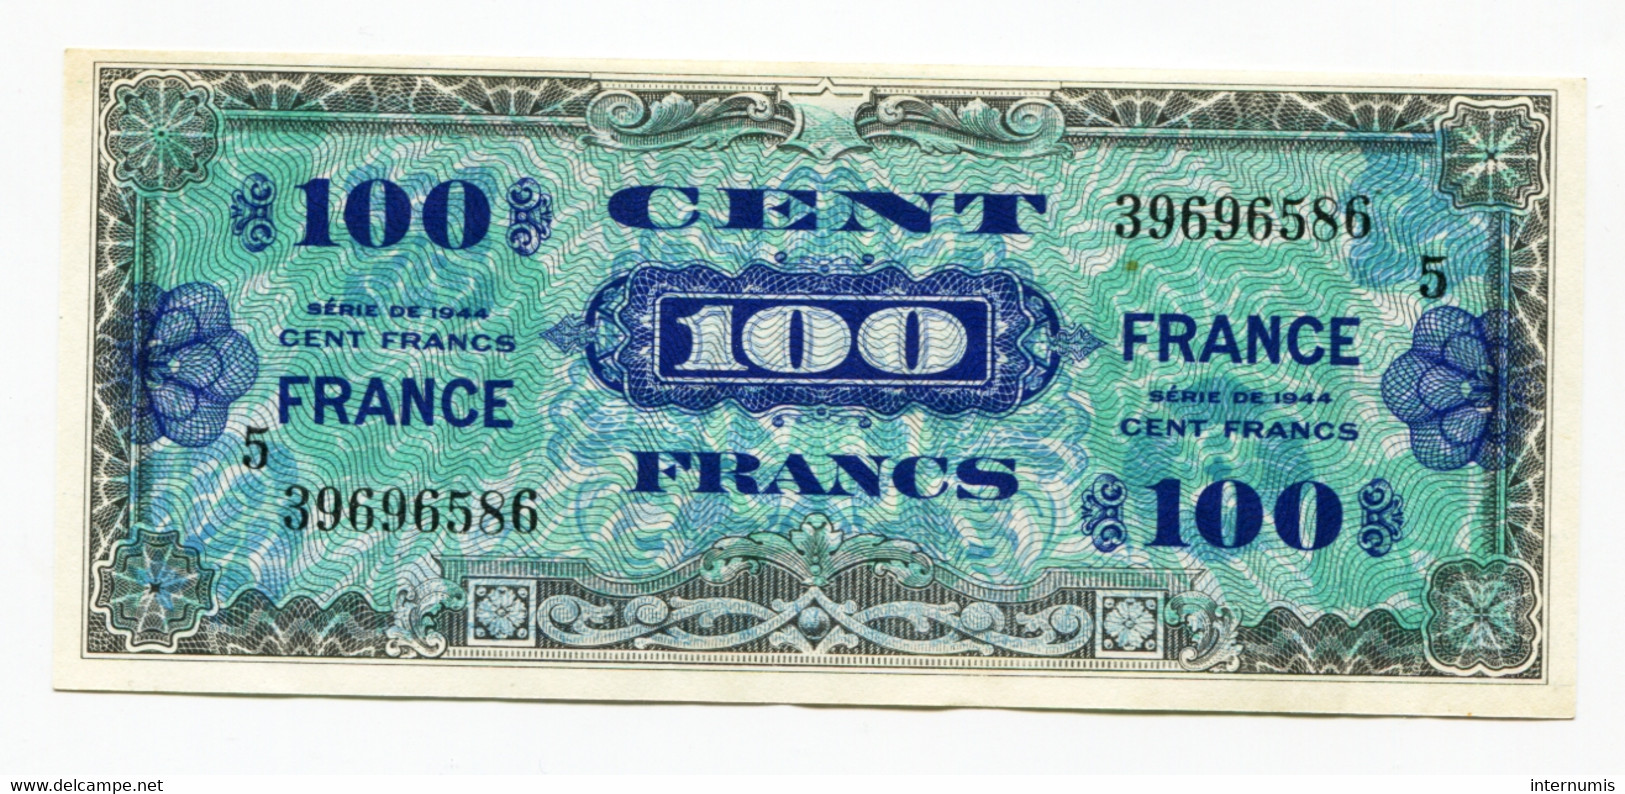 France, 100 Francs, FRANCE SERIE 5 IMPRESSION AMERICAINE, TYPE DE 1944, N° : 5-39696586, SPL (AU), VF.25.05 - 1945 Verso Francia